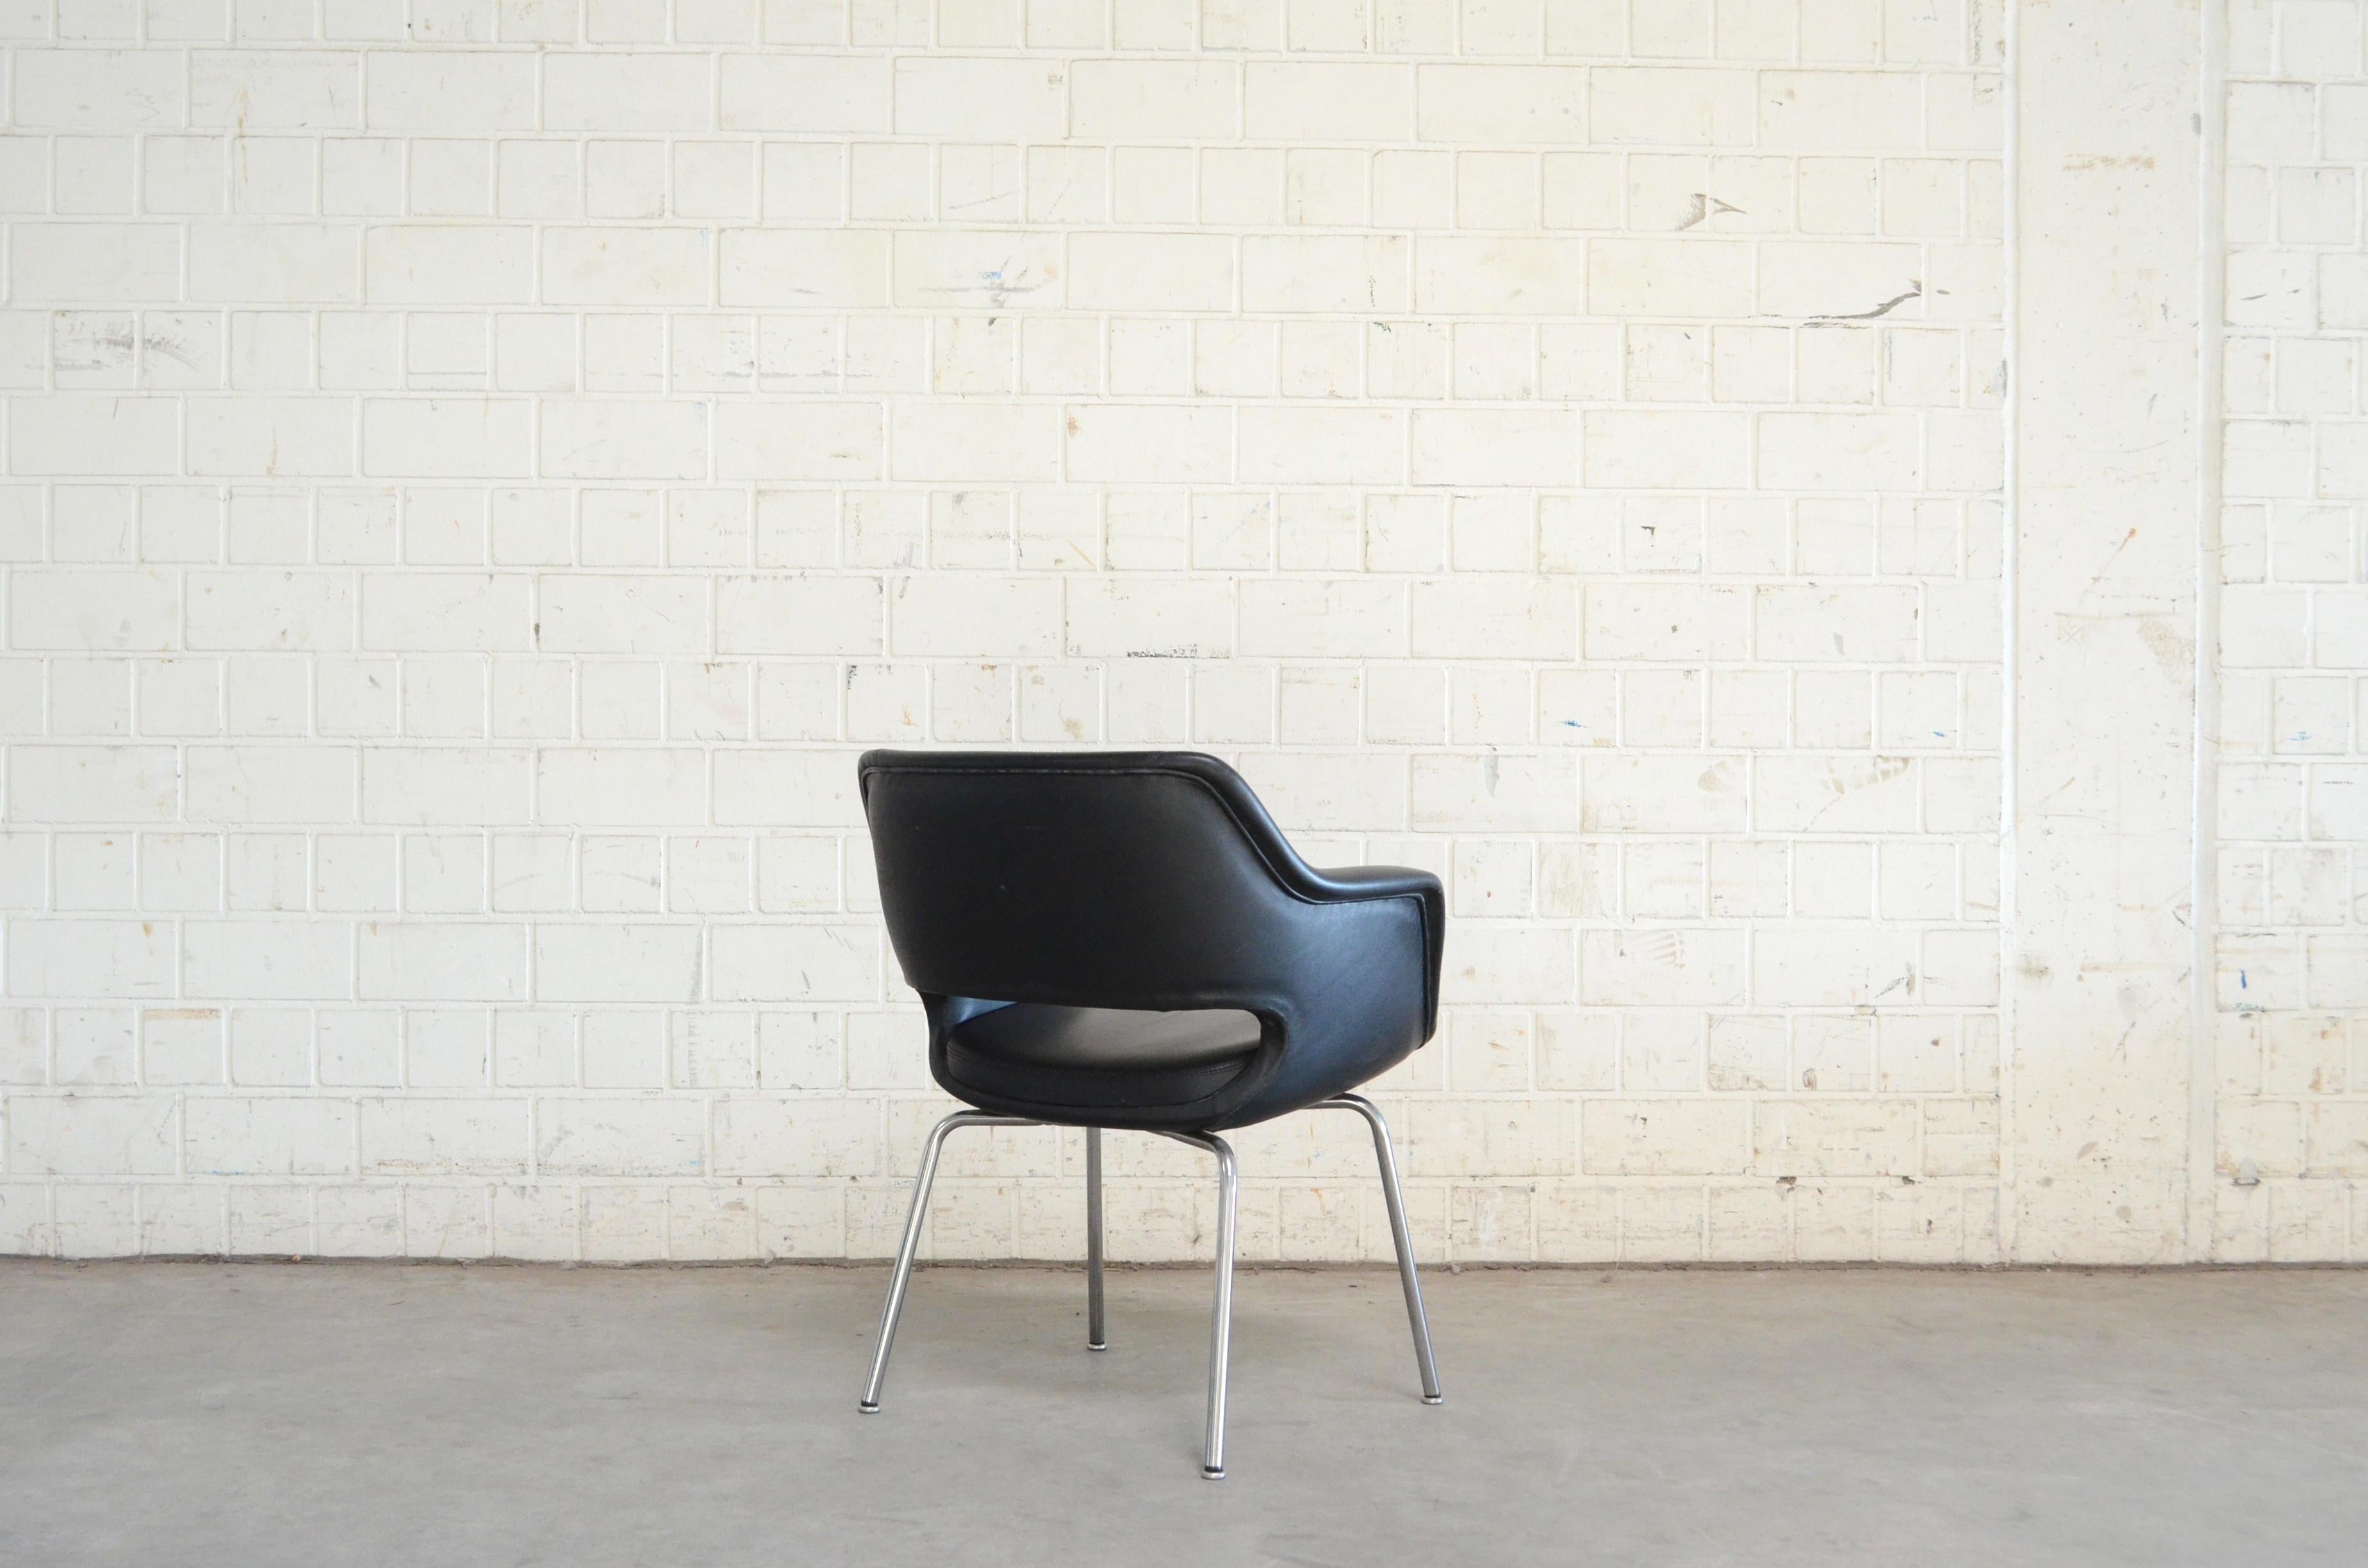 Olli Mannermaa Set of 4 Leather Kilta Chair by Eugen Schmidt & Cassina Martela For Sale 1